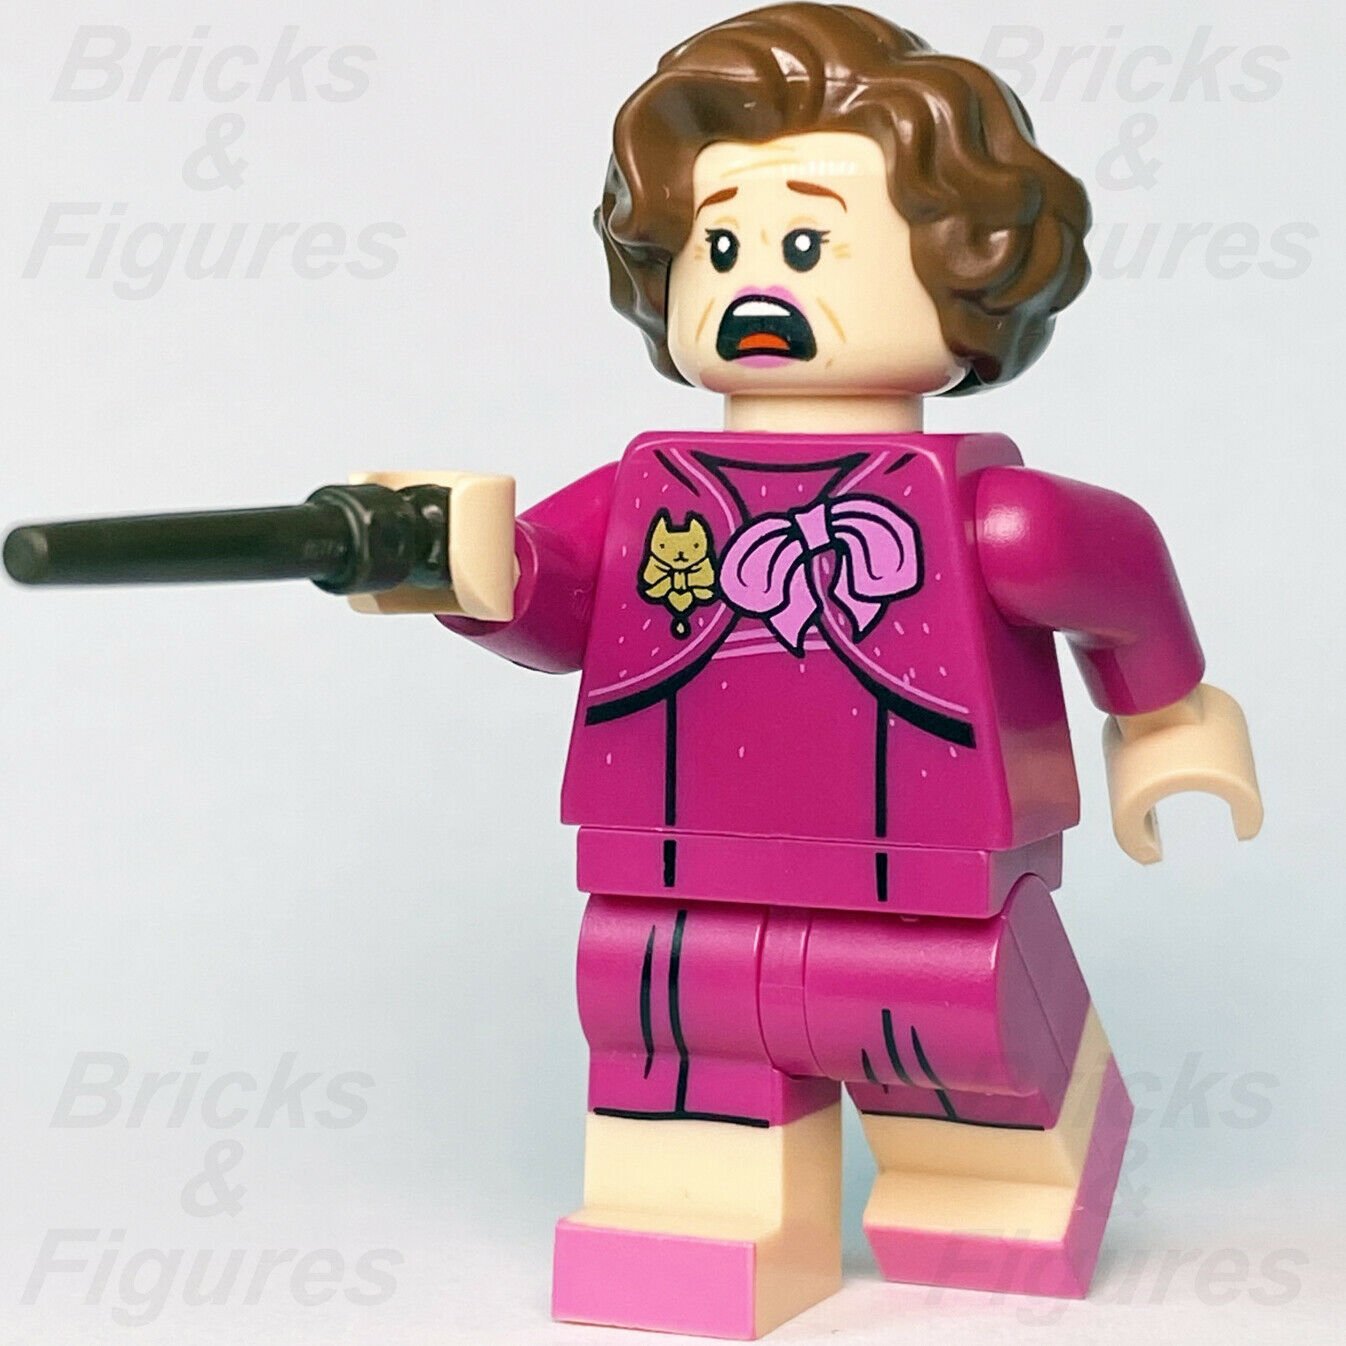 New Harry Potter LEGO Professor Dolores Umbridge Minifigure 75967 hp235 - Bricks & Figures